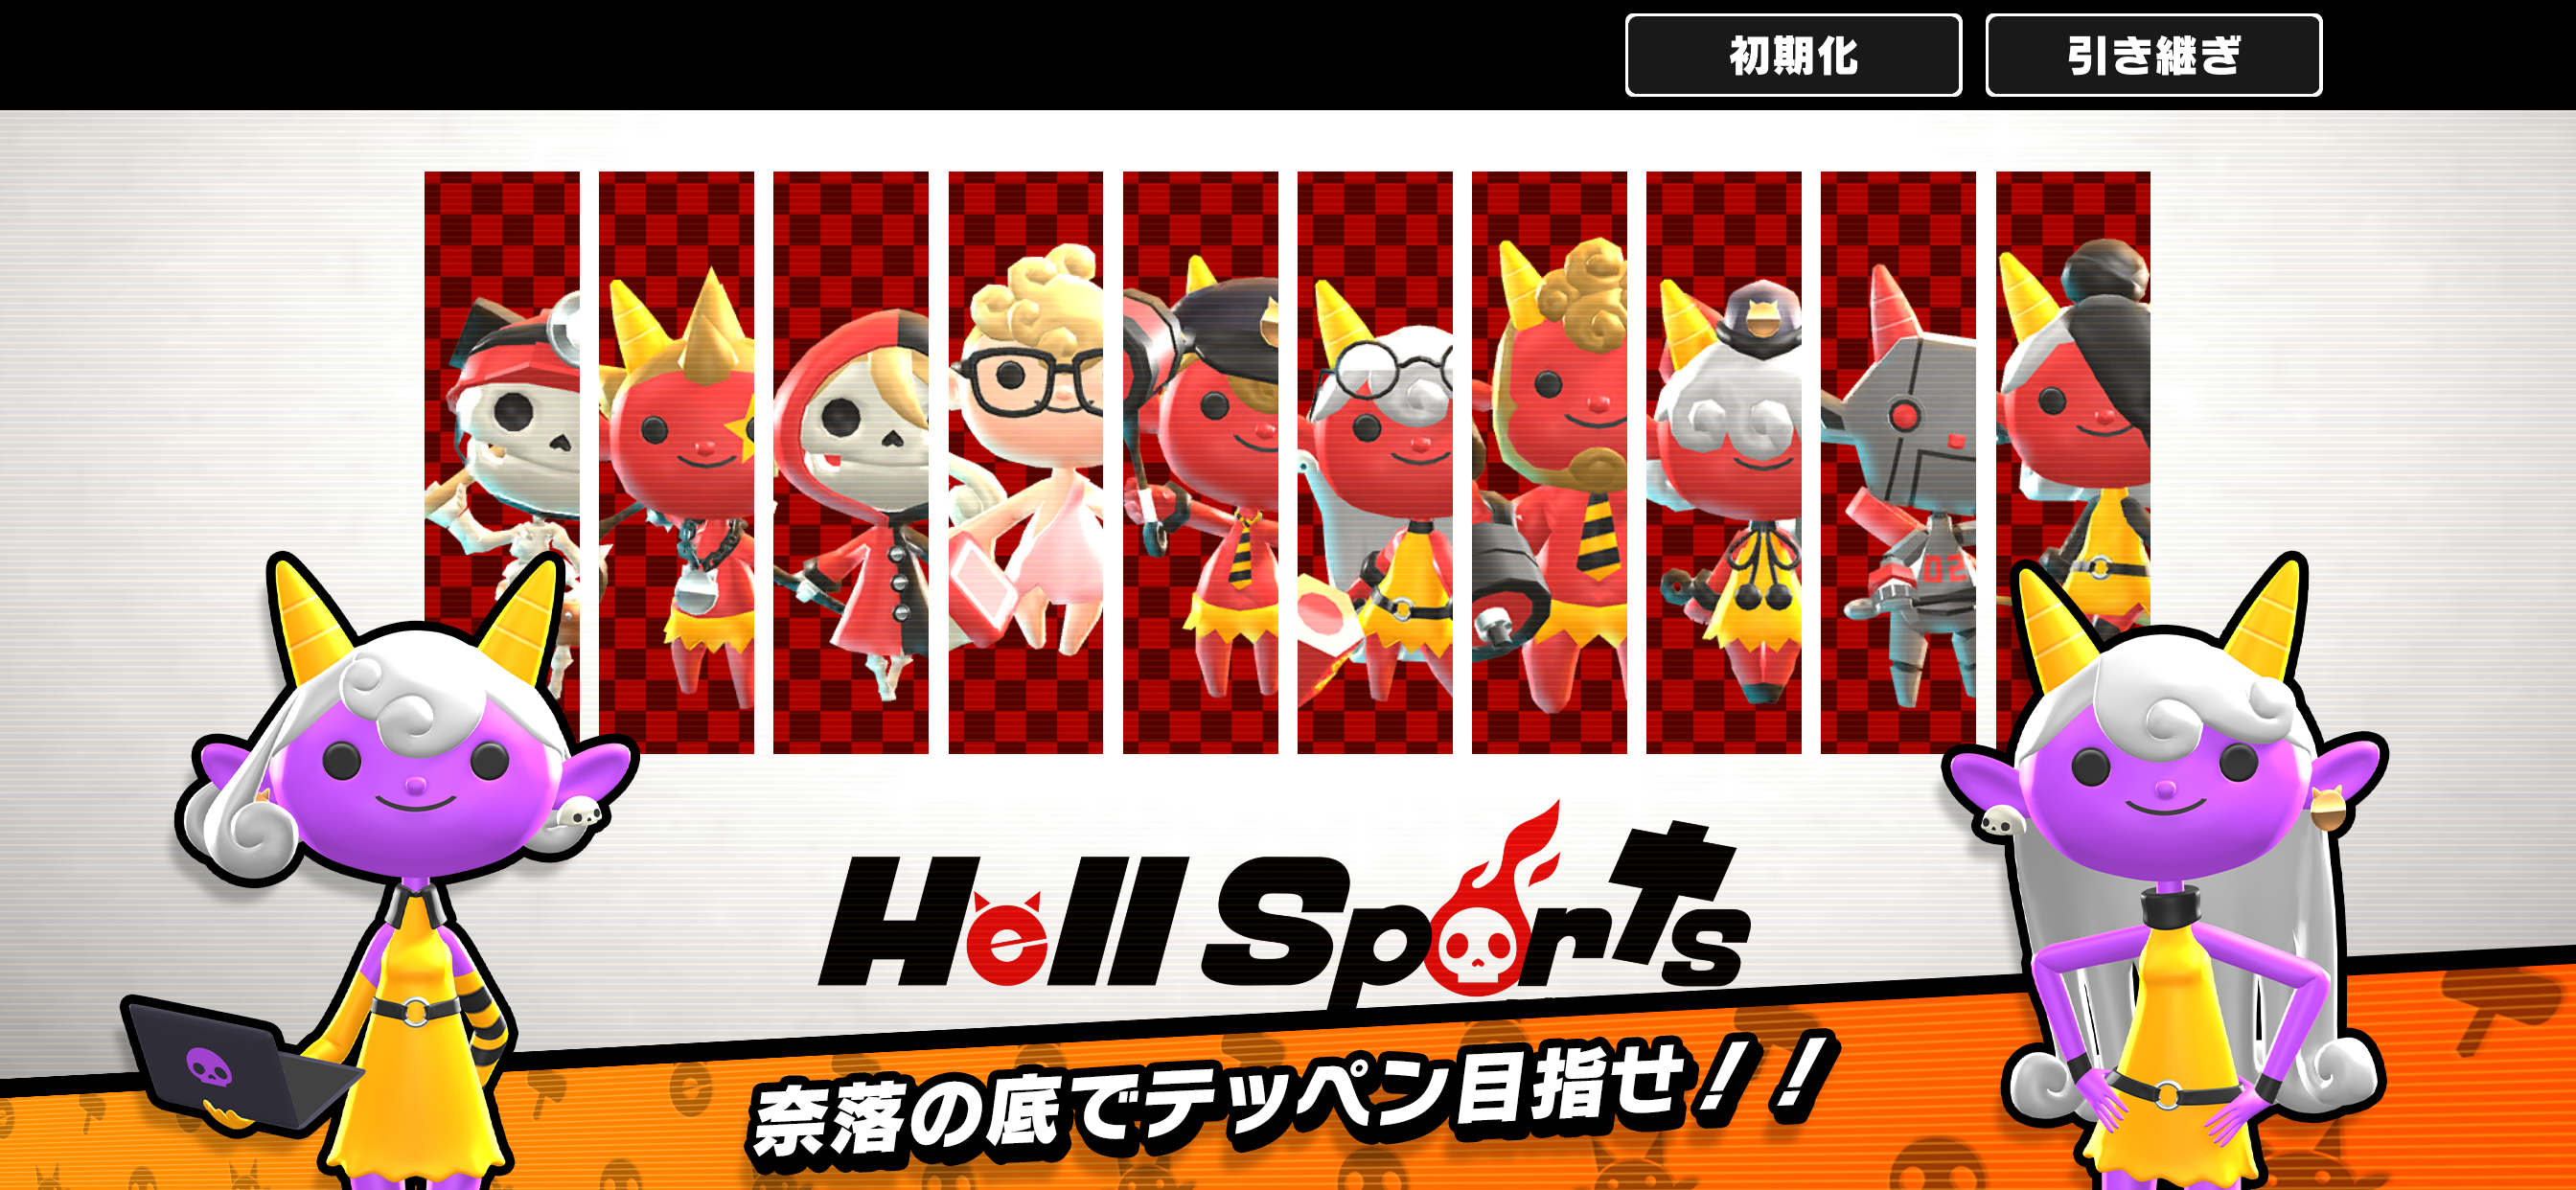 Screenshot 1 of Hell Sports 